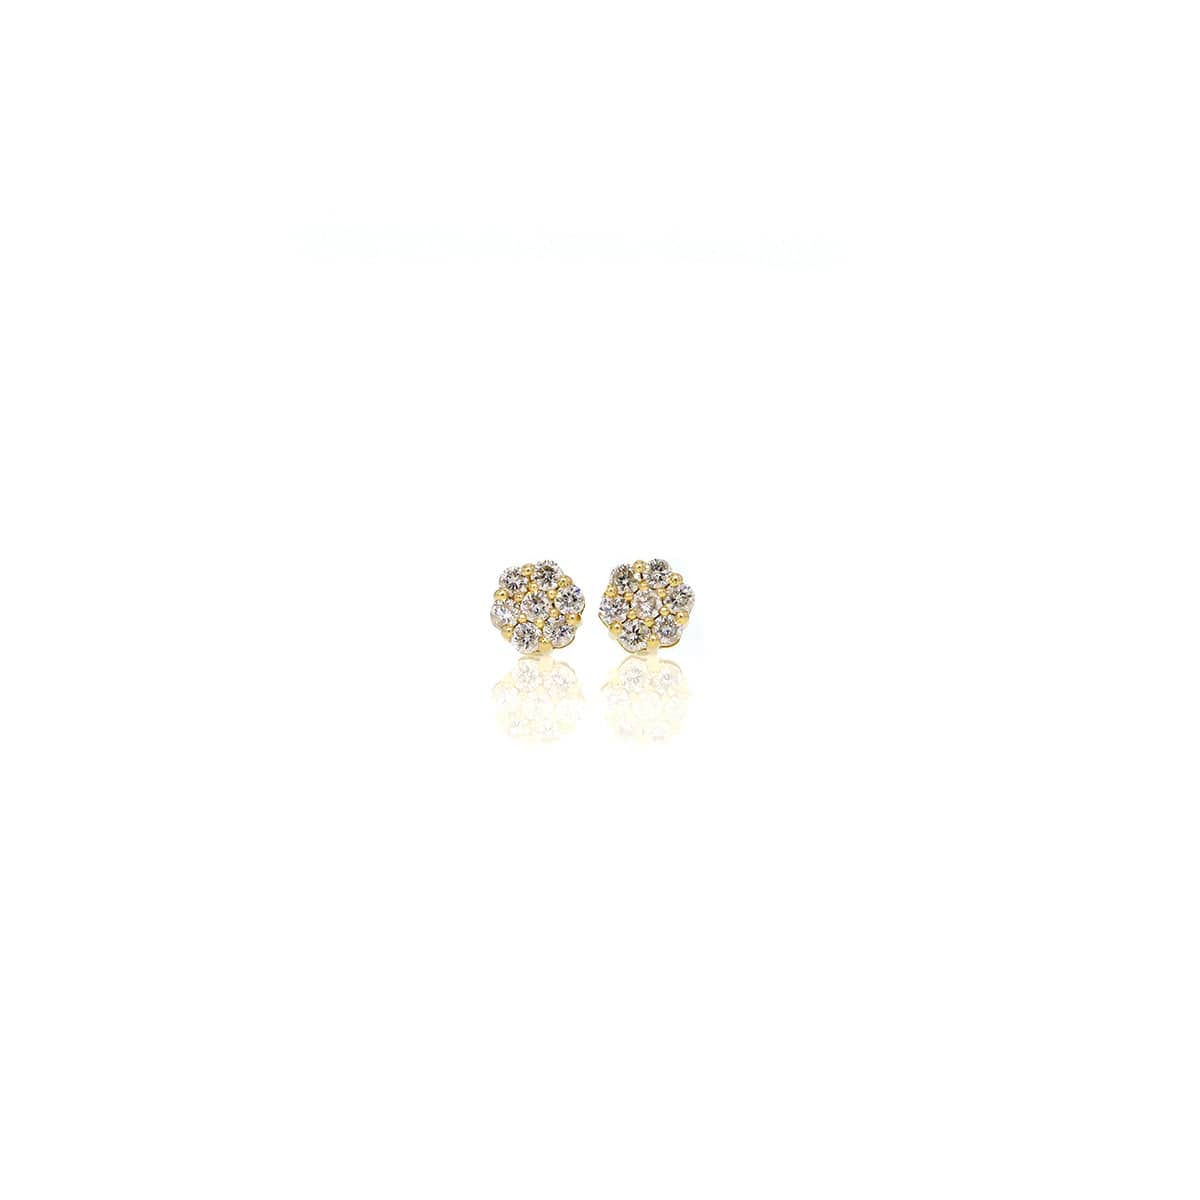 Capri Earrings 1/4 ctw Diamond Flower Cluster Stud Earrings 14K